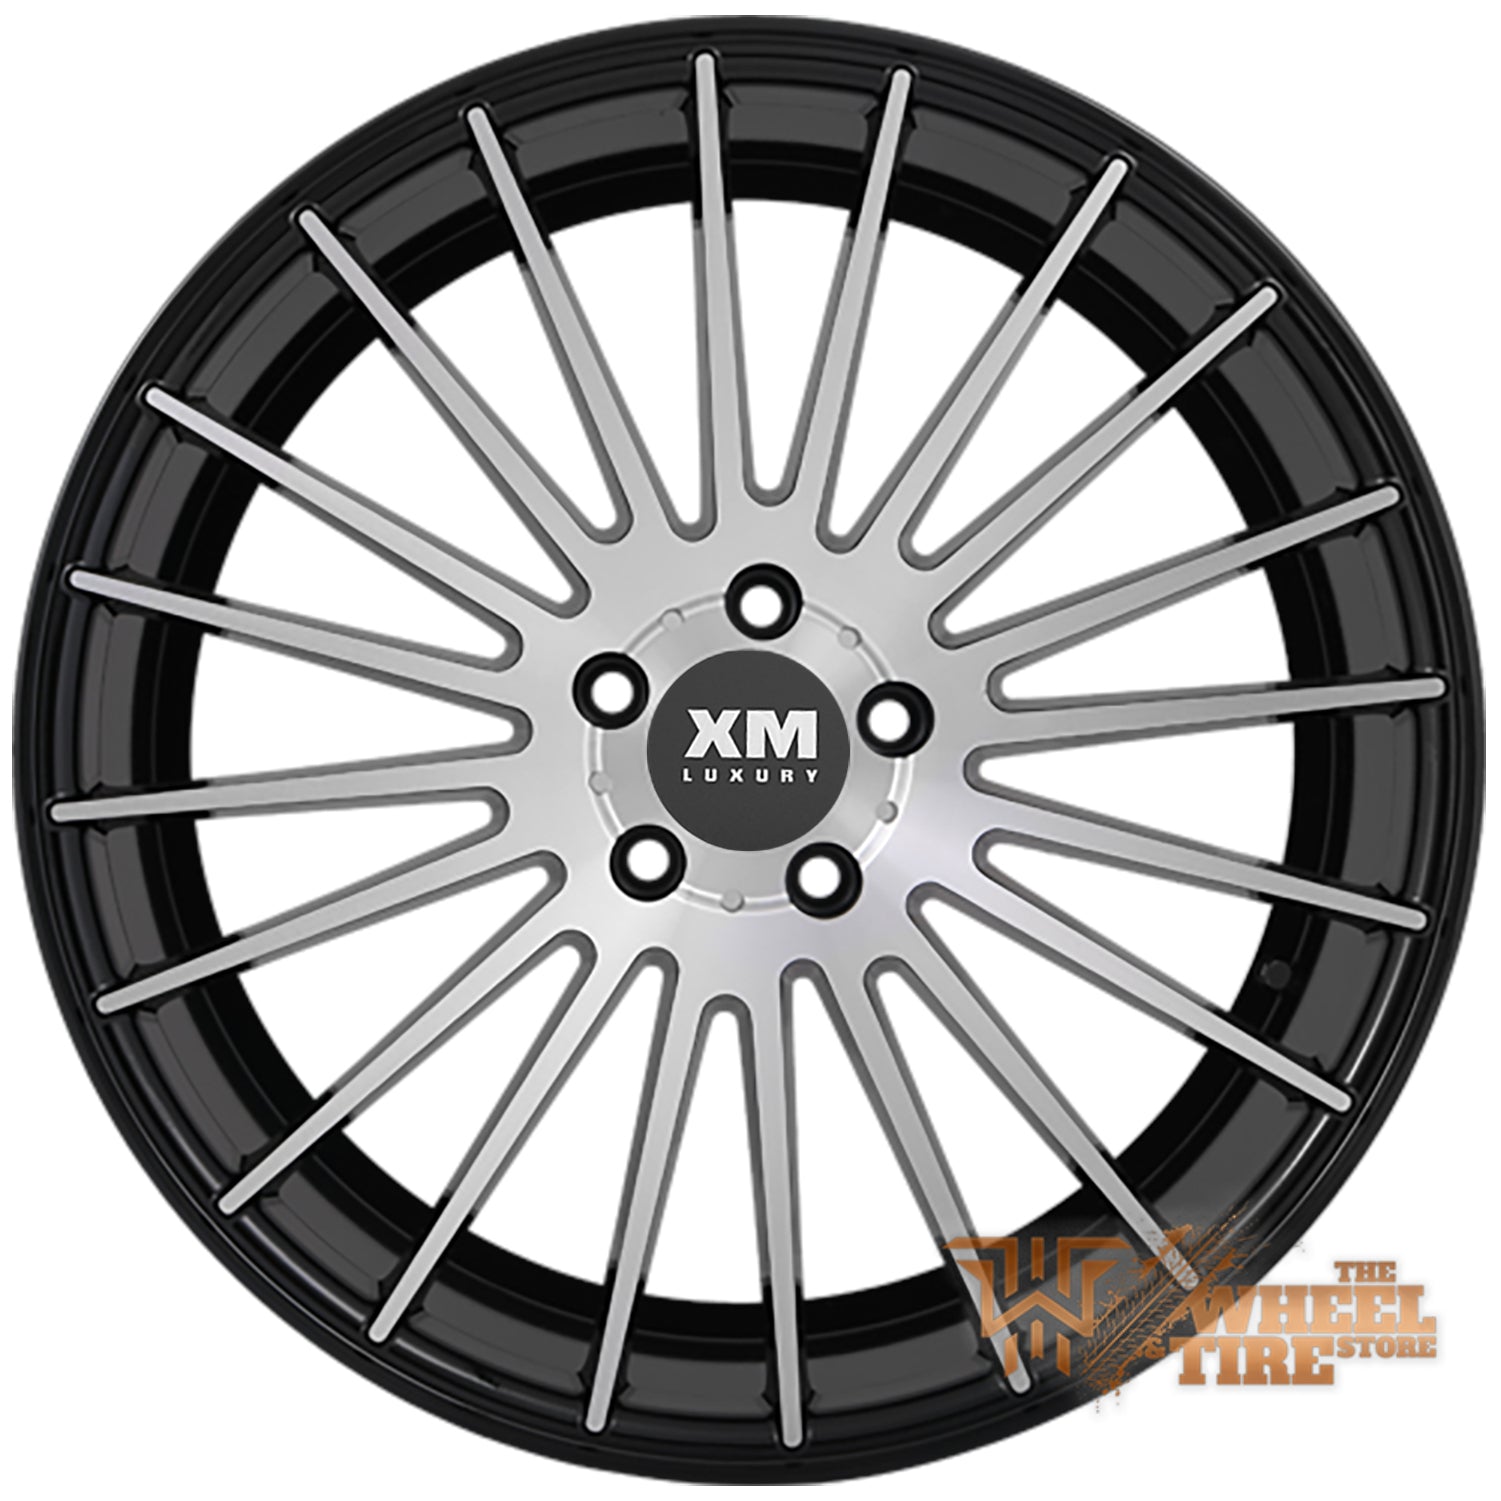 XM LUXURY XM-201 Wheel in Black Machined Face (Set of 4)